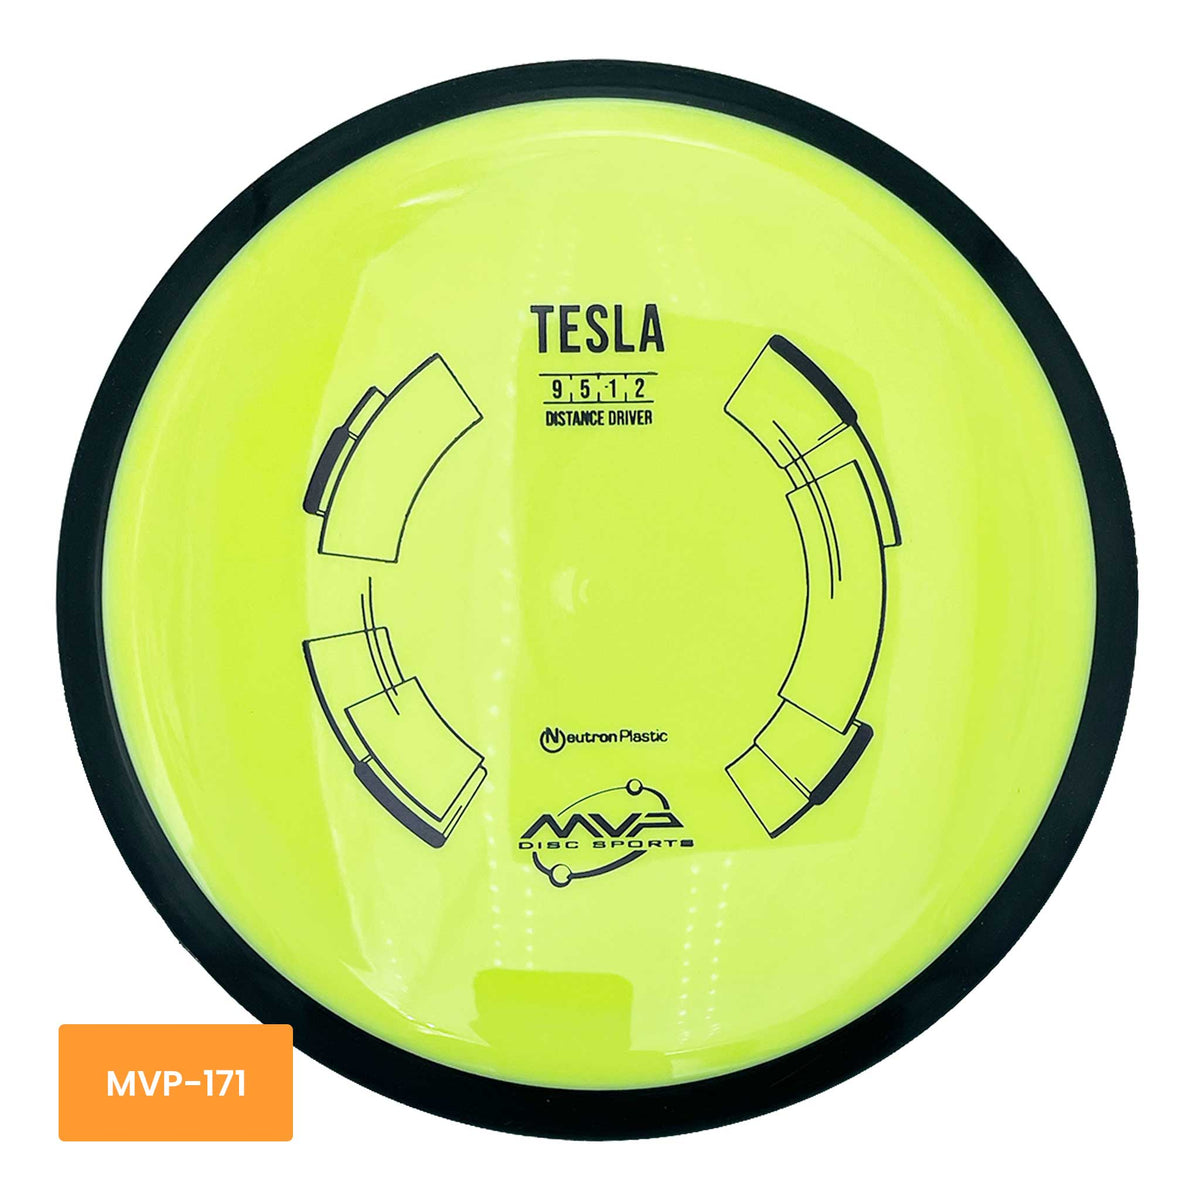 MVP Disc Sports Neutron Tesla distance driver - Yellow